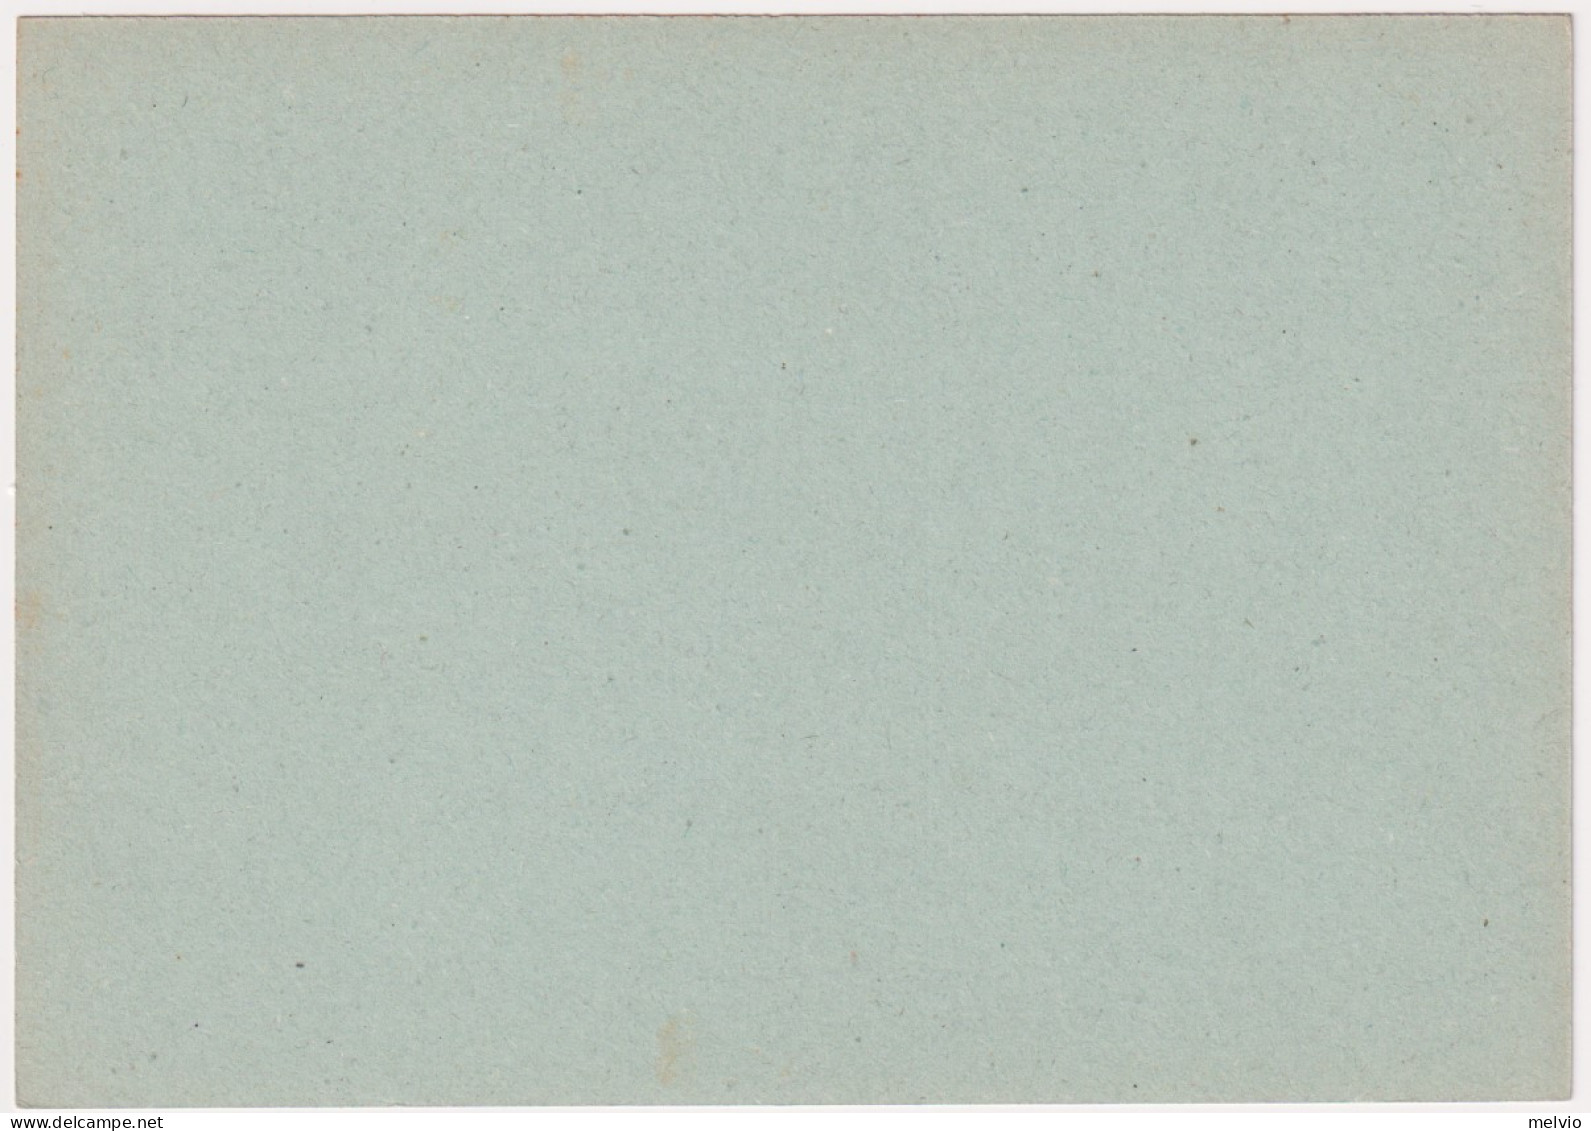 1944-cartolina Postale Franchigia Cartiglio Grande E Formulario In Basso - Stamped Stationery